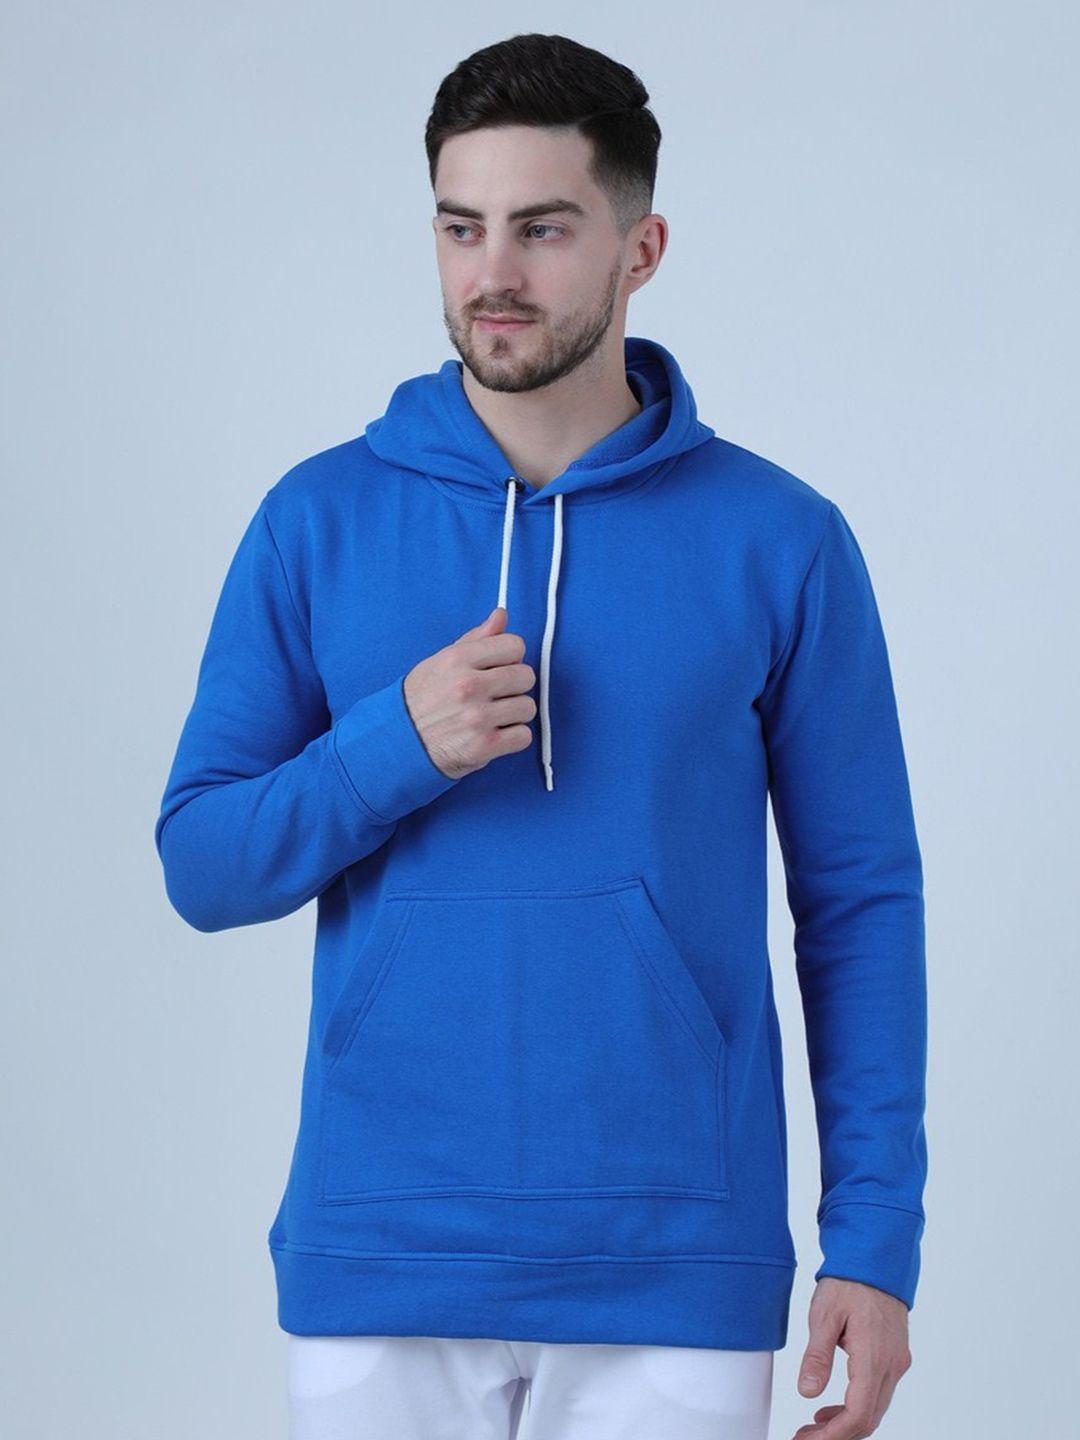 pause-sport-fleece-hooded-sweatshirt